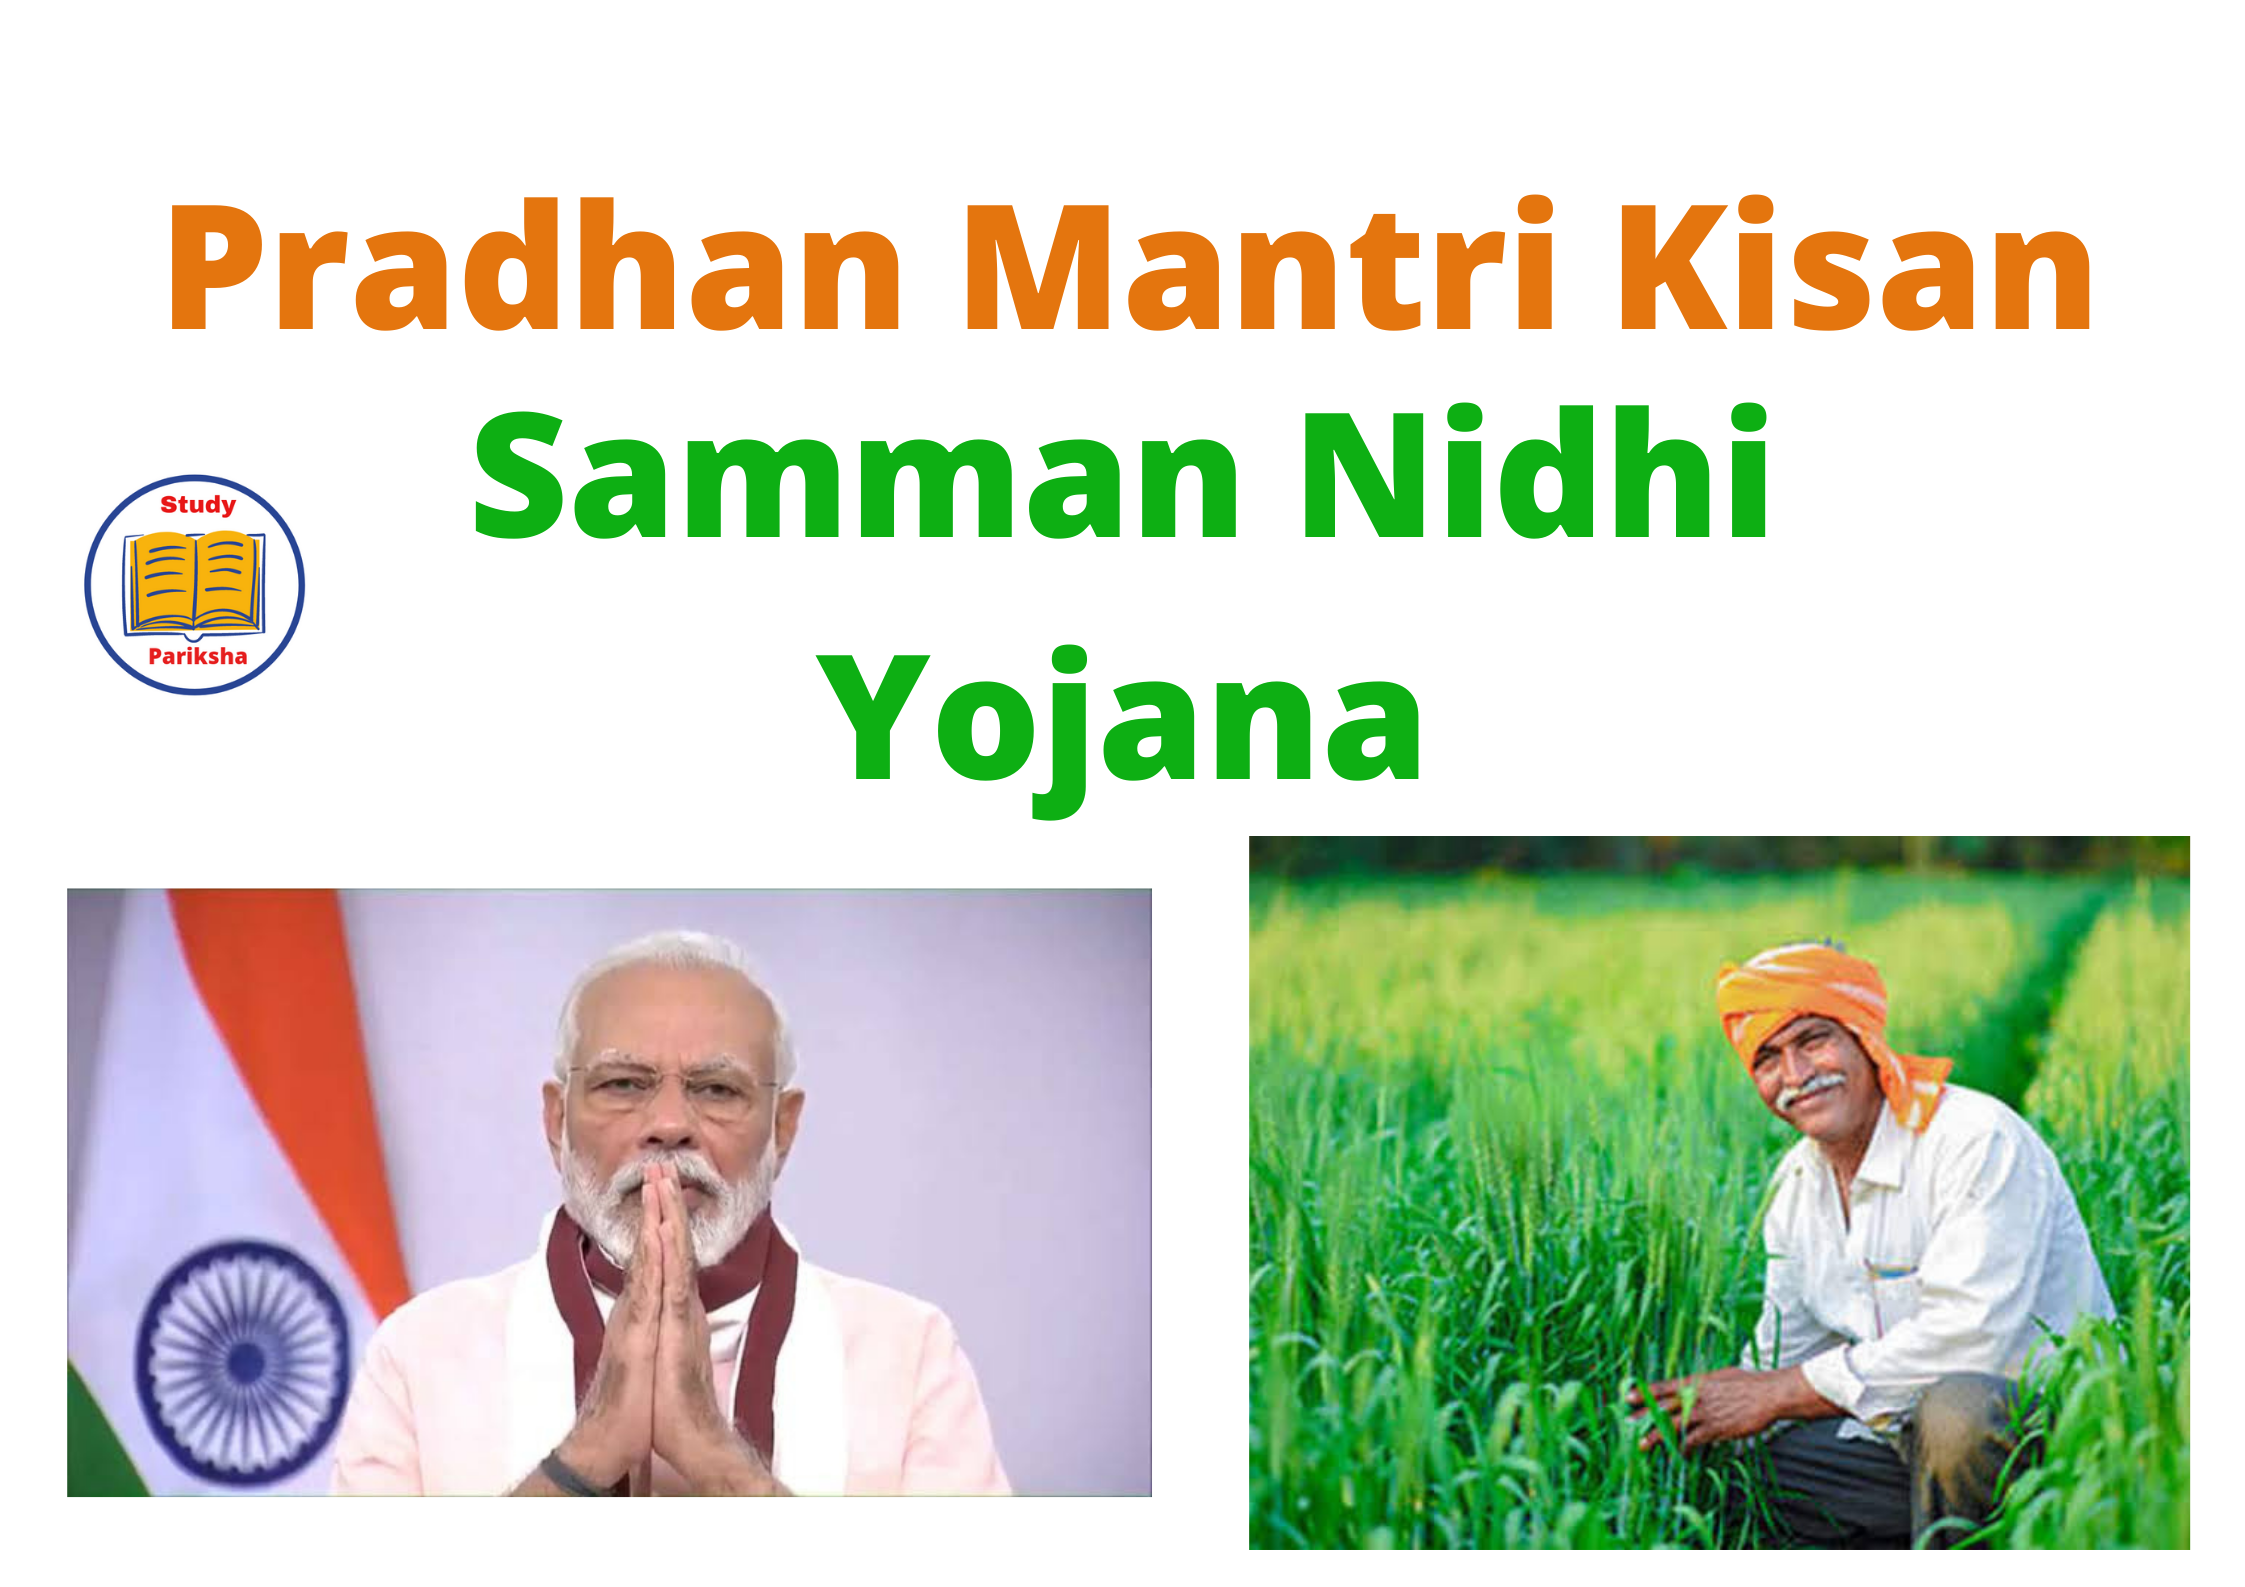 "PM kisan Samman Nidhi Yojana Govt scheme"